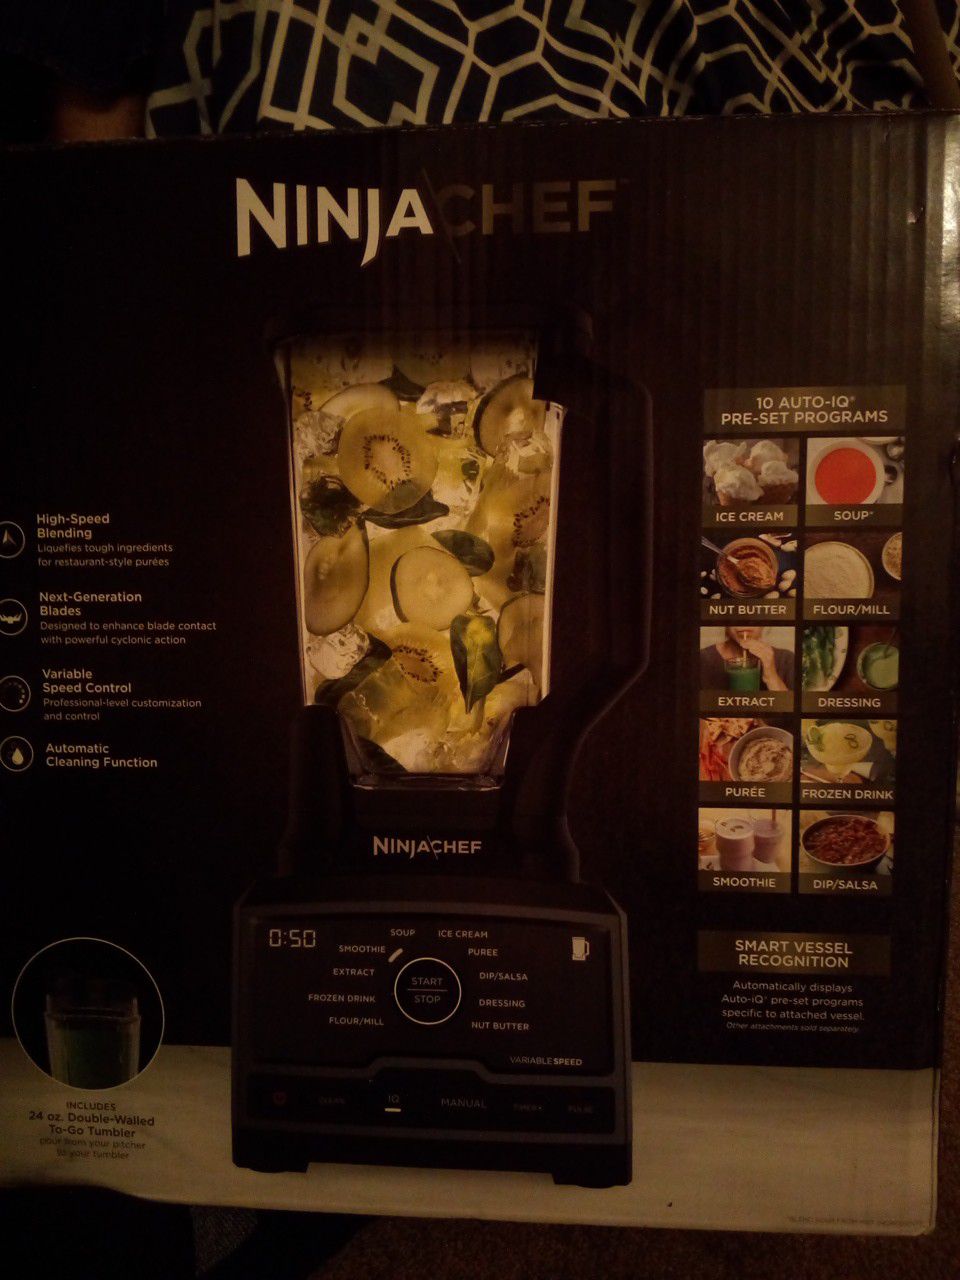 Ninja Chef Blender Brand New In Box worth 180$ asking 90